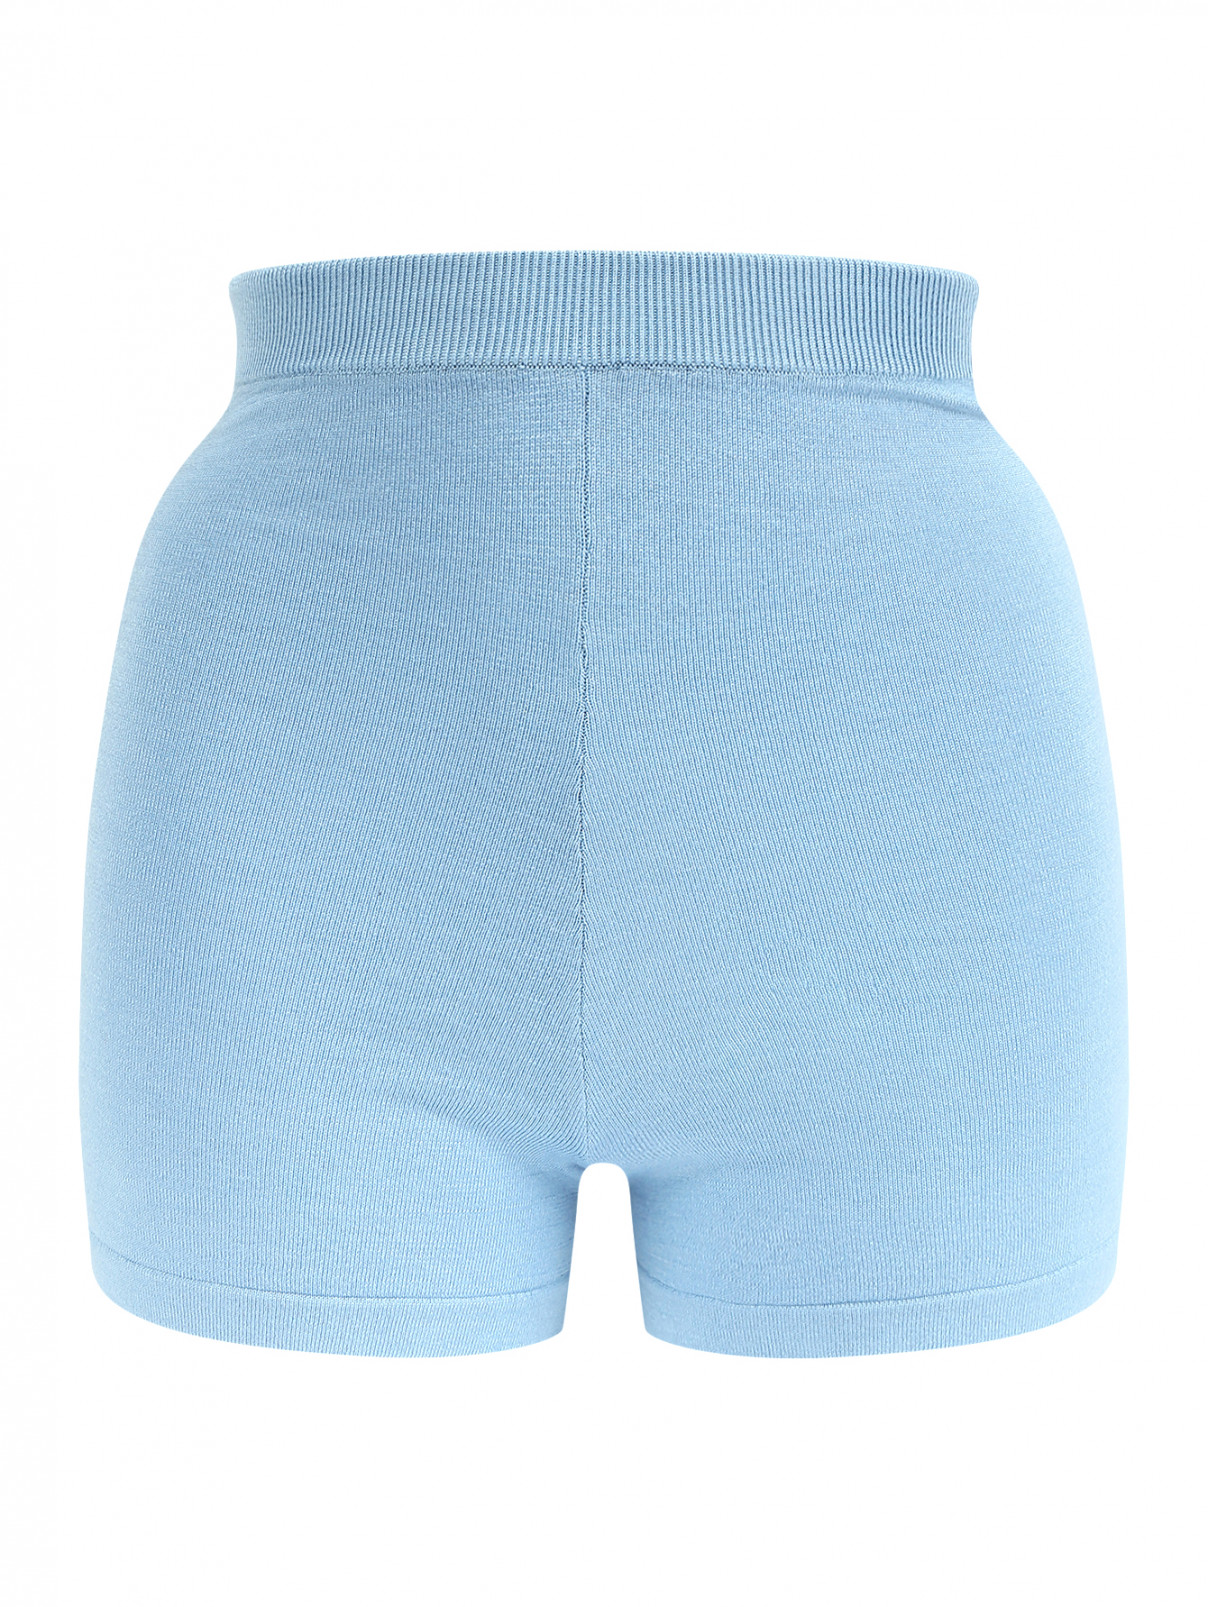 Панталоны из шелкового трикотажа La Perla  –  Общий вид  – Цвет:  Синий